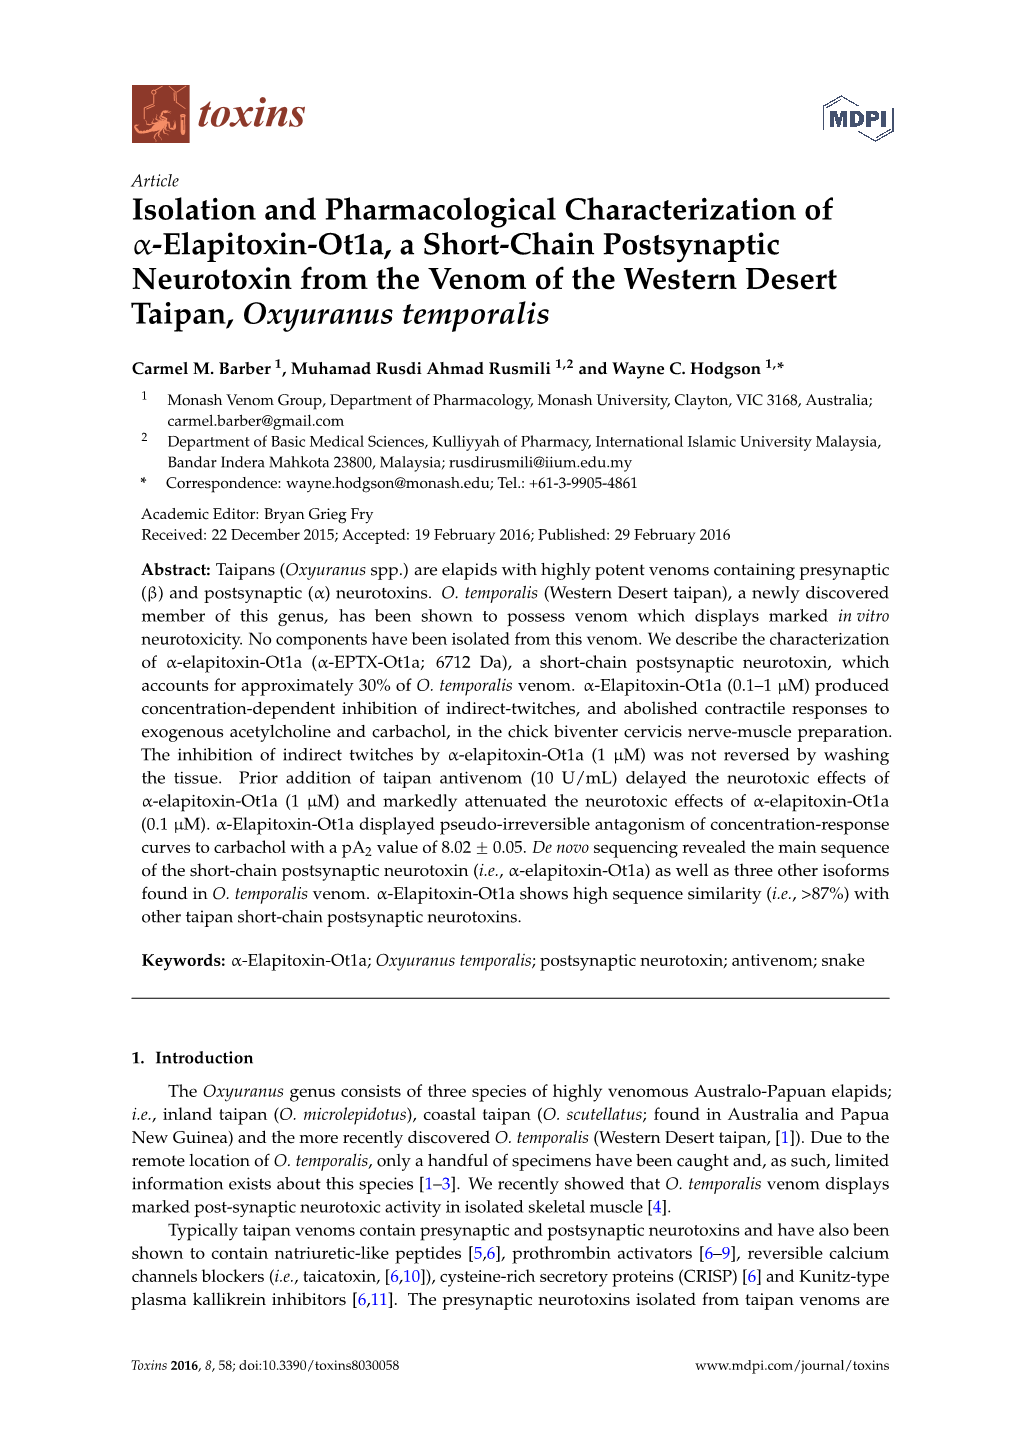 Elapitoxin-Ot1a, a Short-Chain Postsynaptic Neurotoxin from the Venom of the Western Desert Taipan, Oxyuranus Temporalis